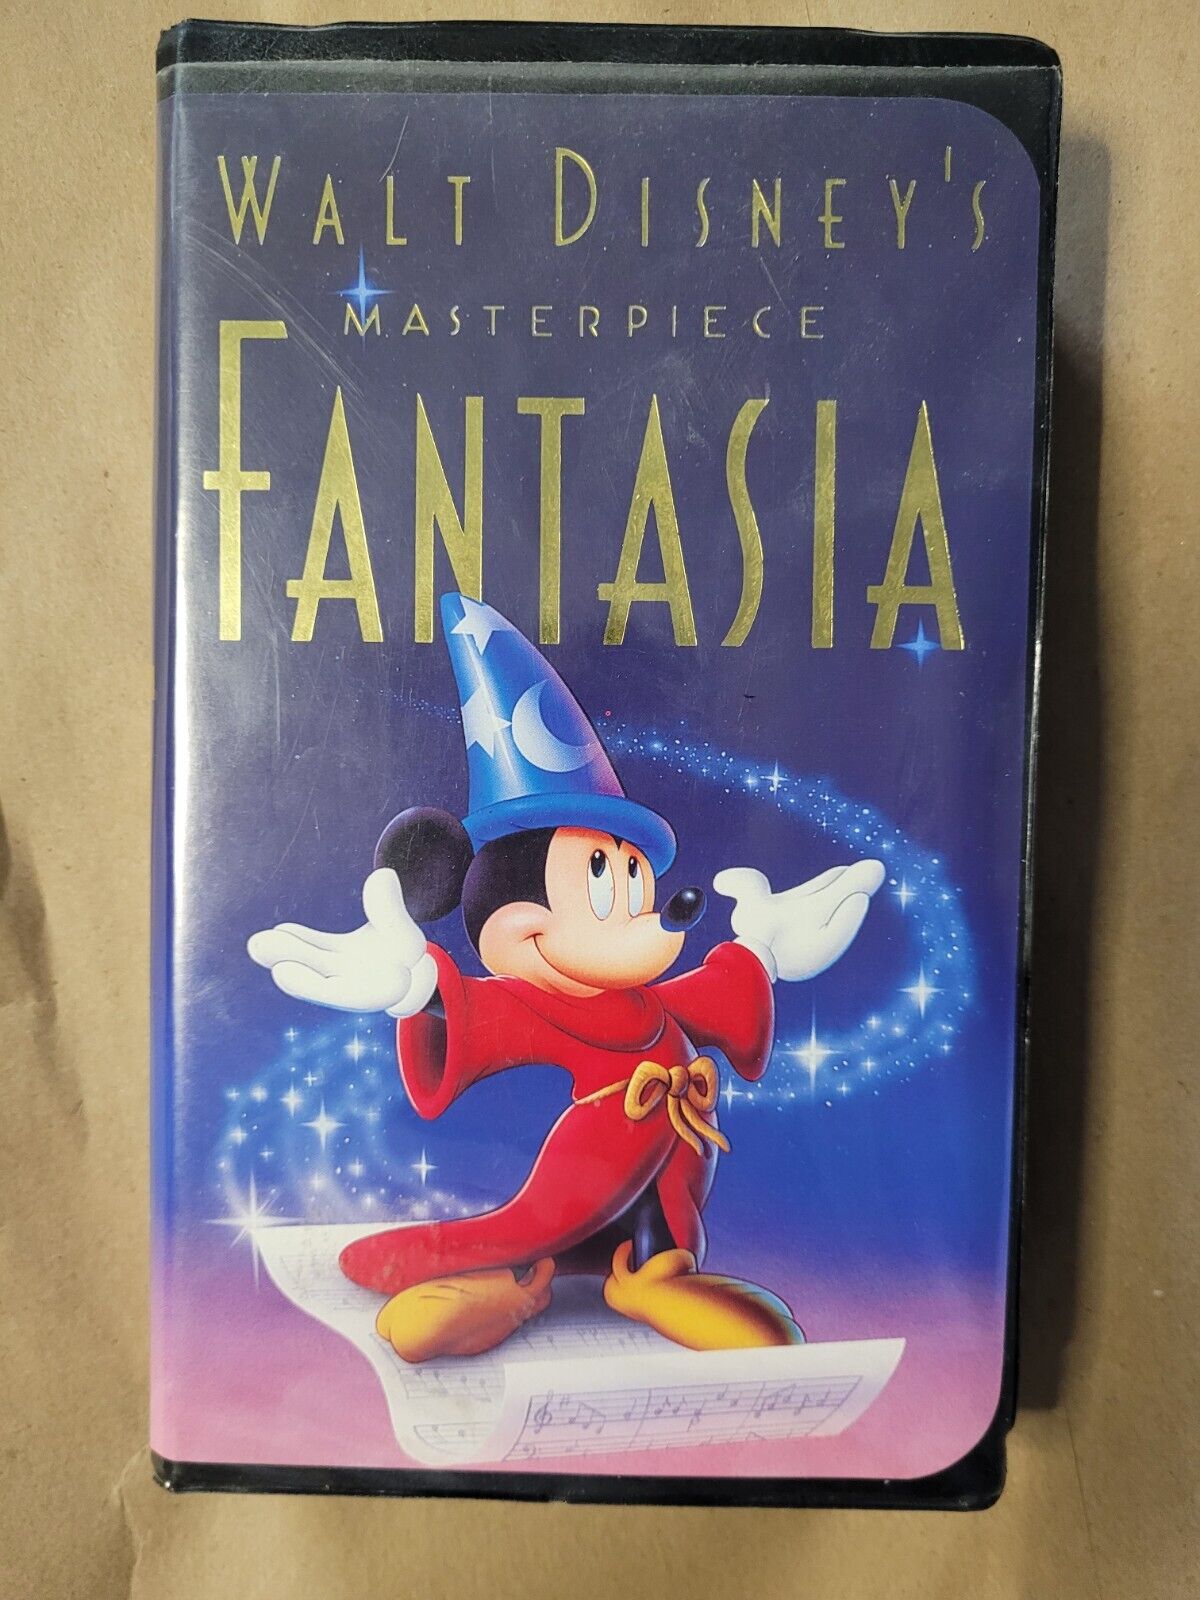 Walt Disney's Masterpiece Fantasia (VHS, 1991) Collectible